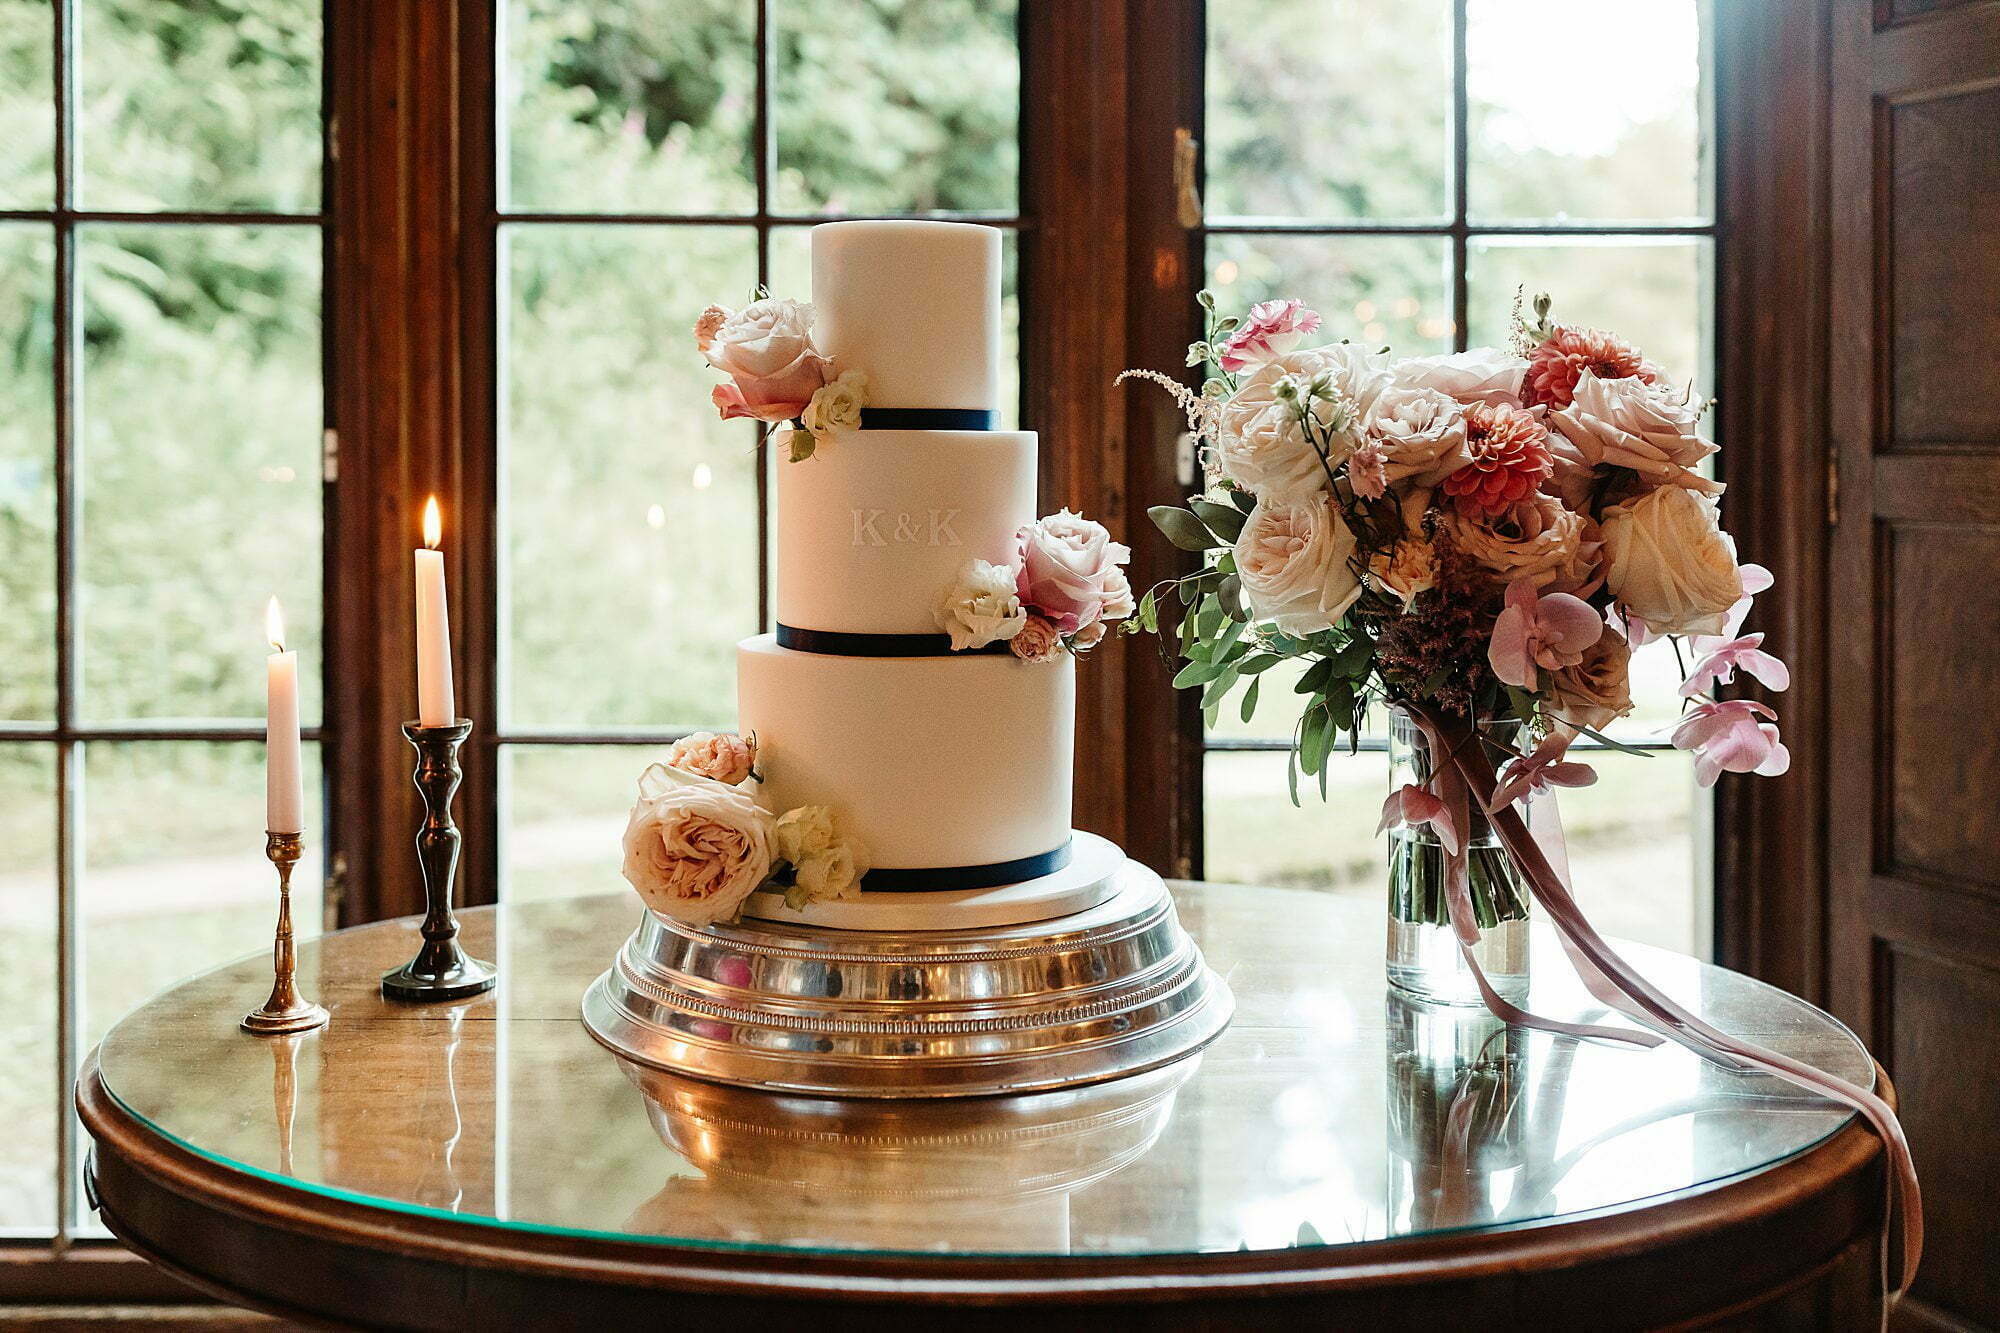 summer drumtochty castle wedding cake by leanne kim dalglish flowers bouquet